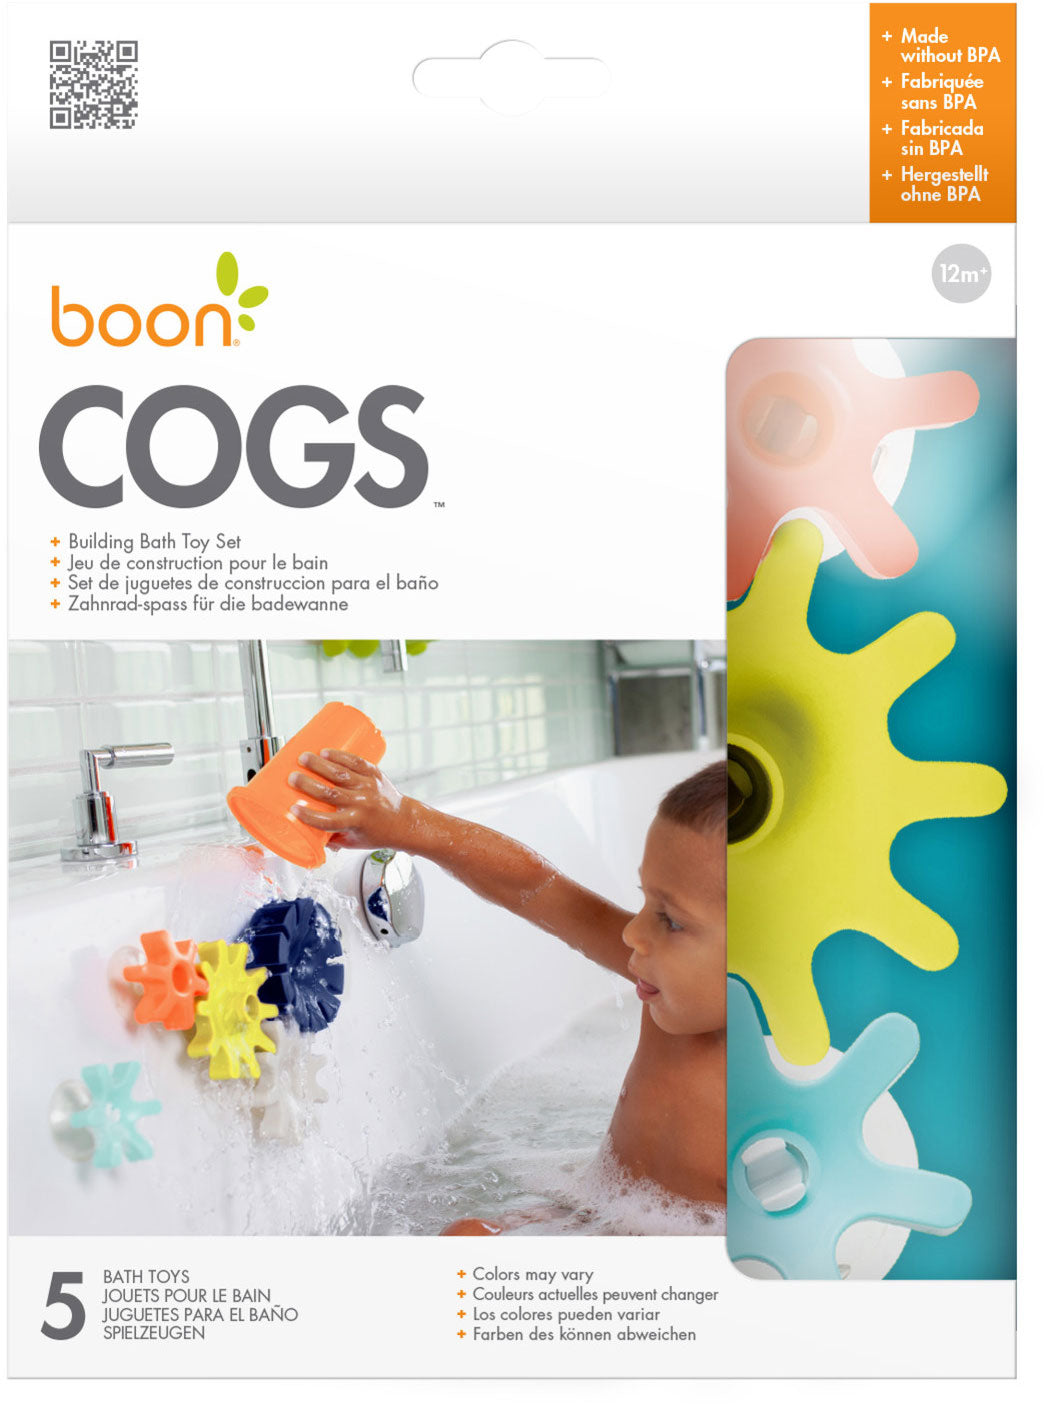 Cogs Water Gears Bath Toy - Boon